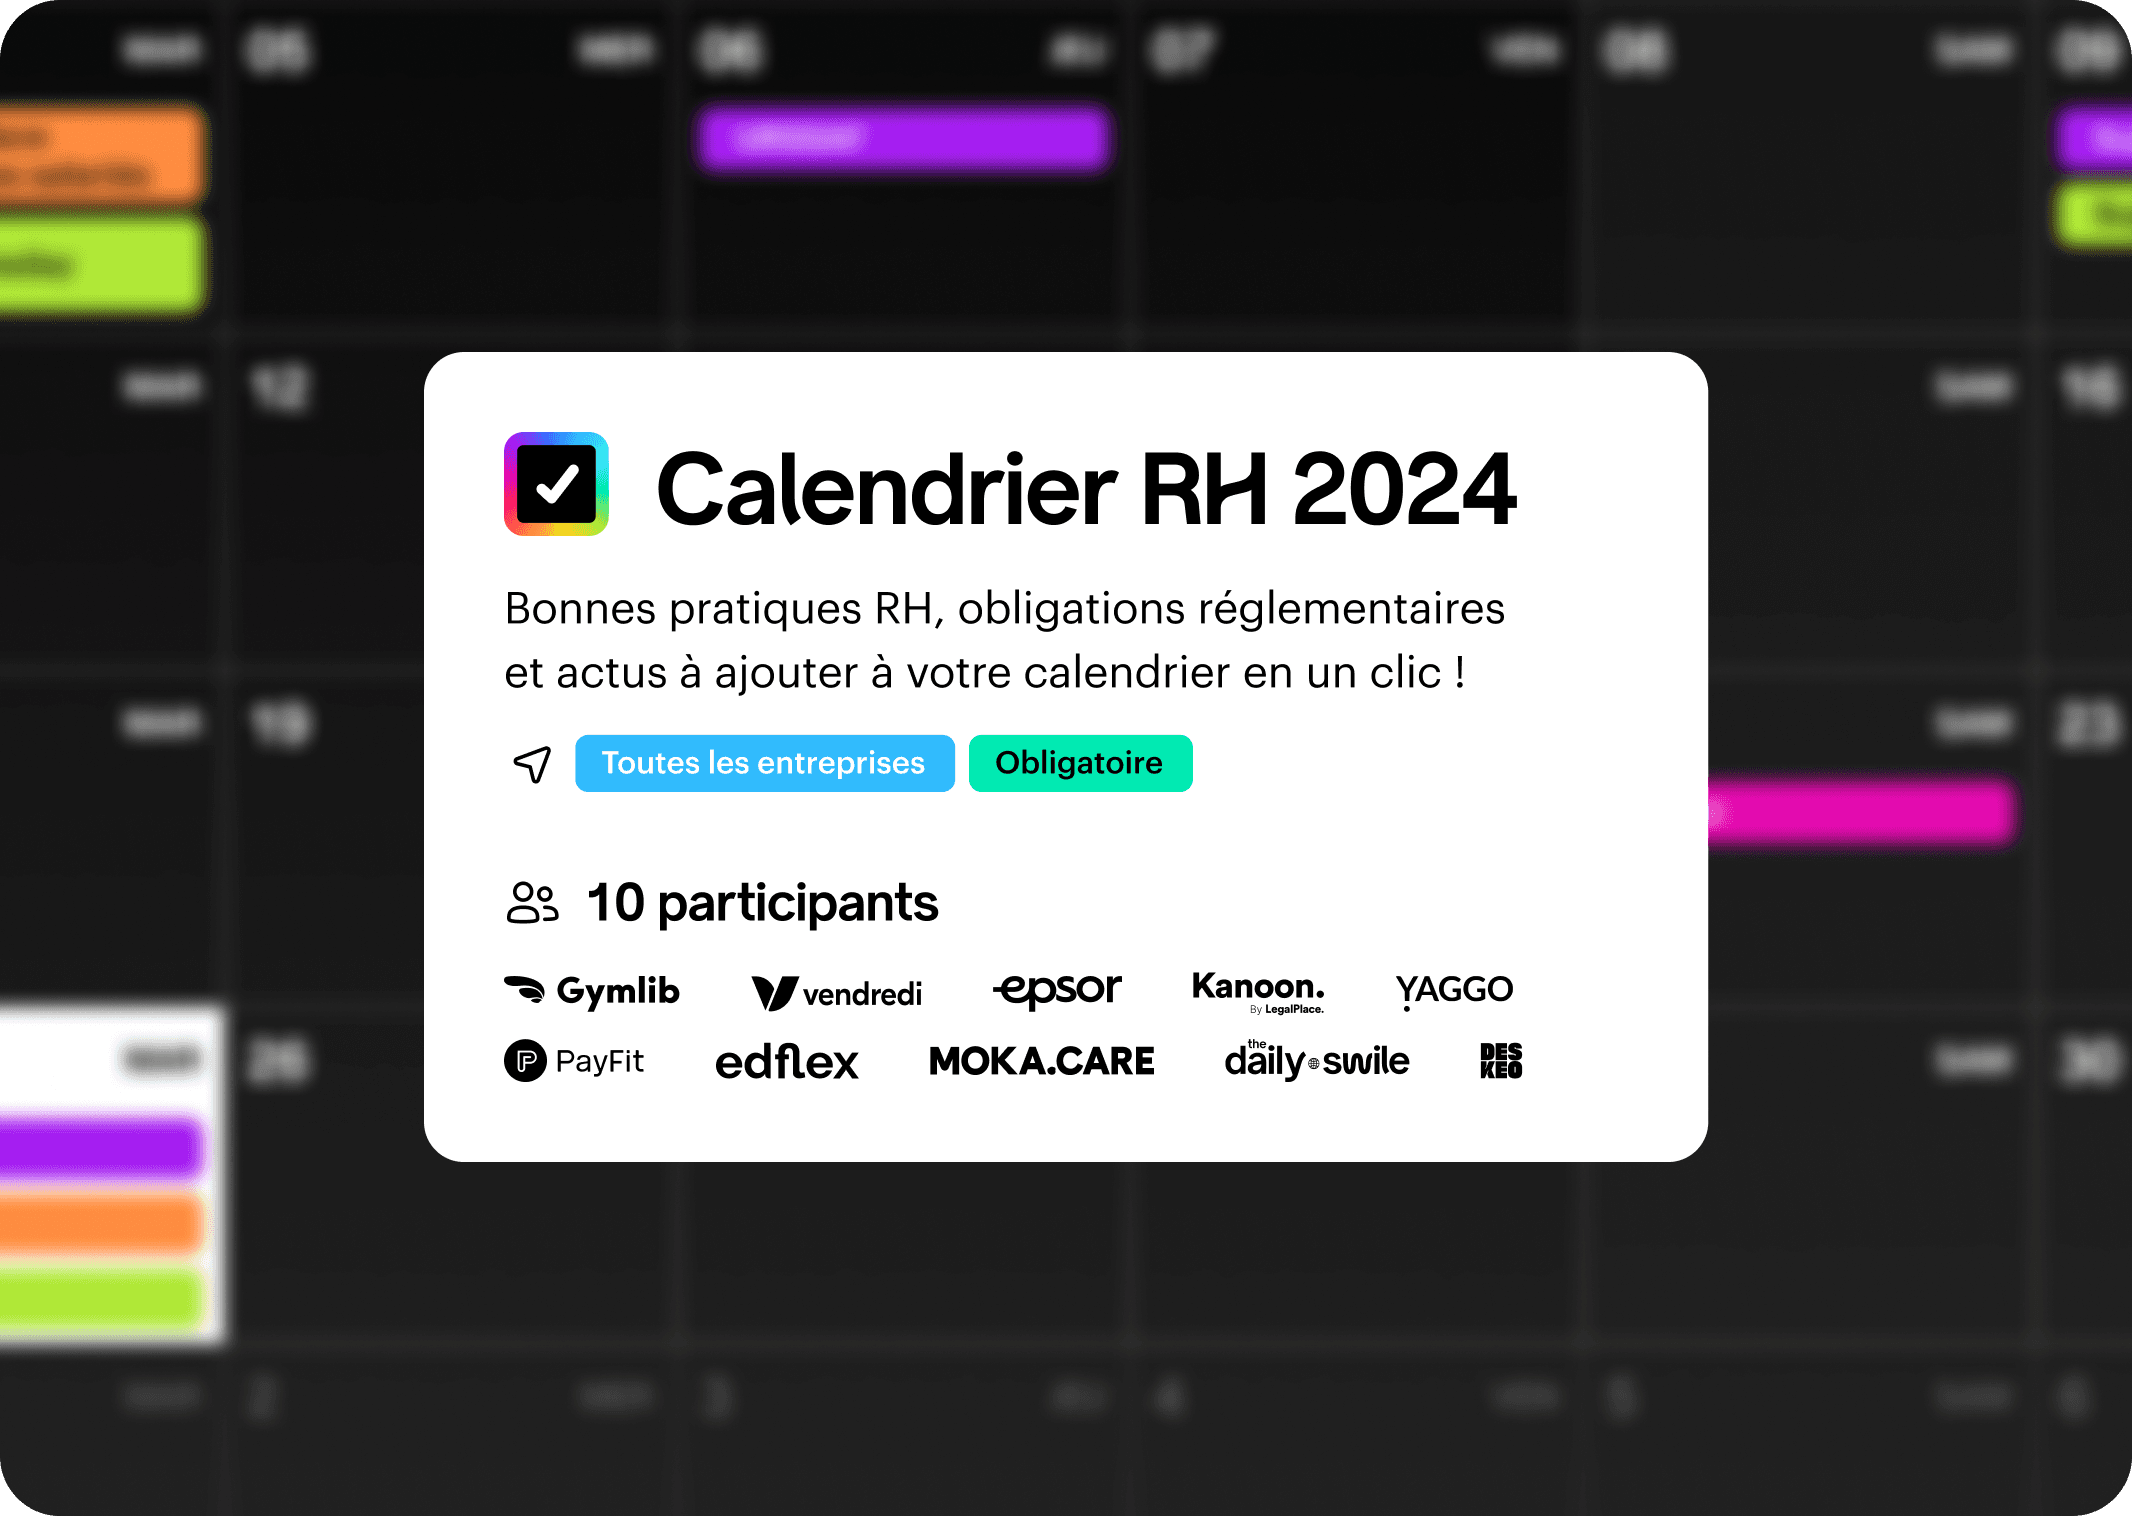 Illustration calendrier RH 2024 avec dates